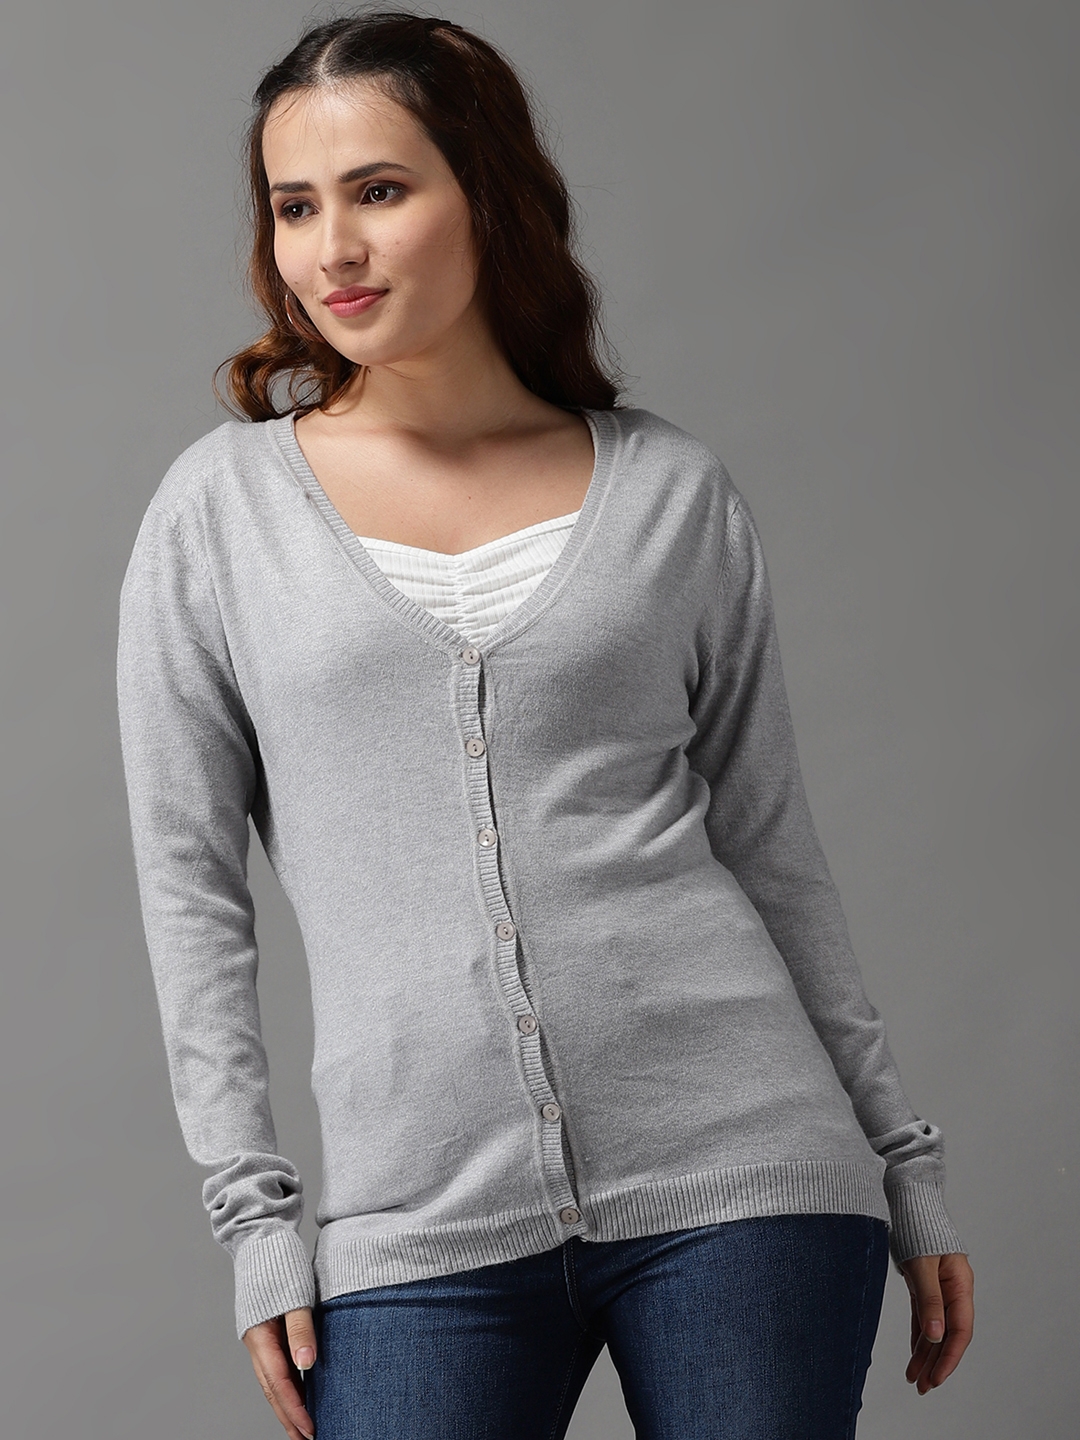 Women's Grey Acrylic Solid Sweaters